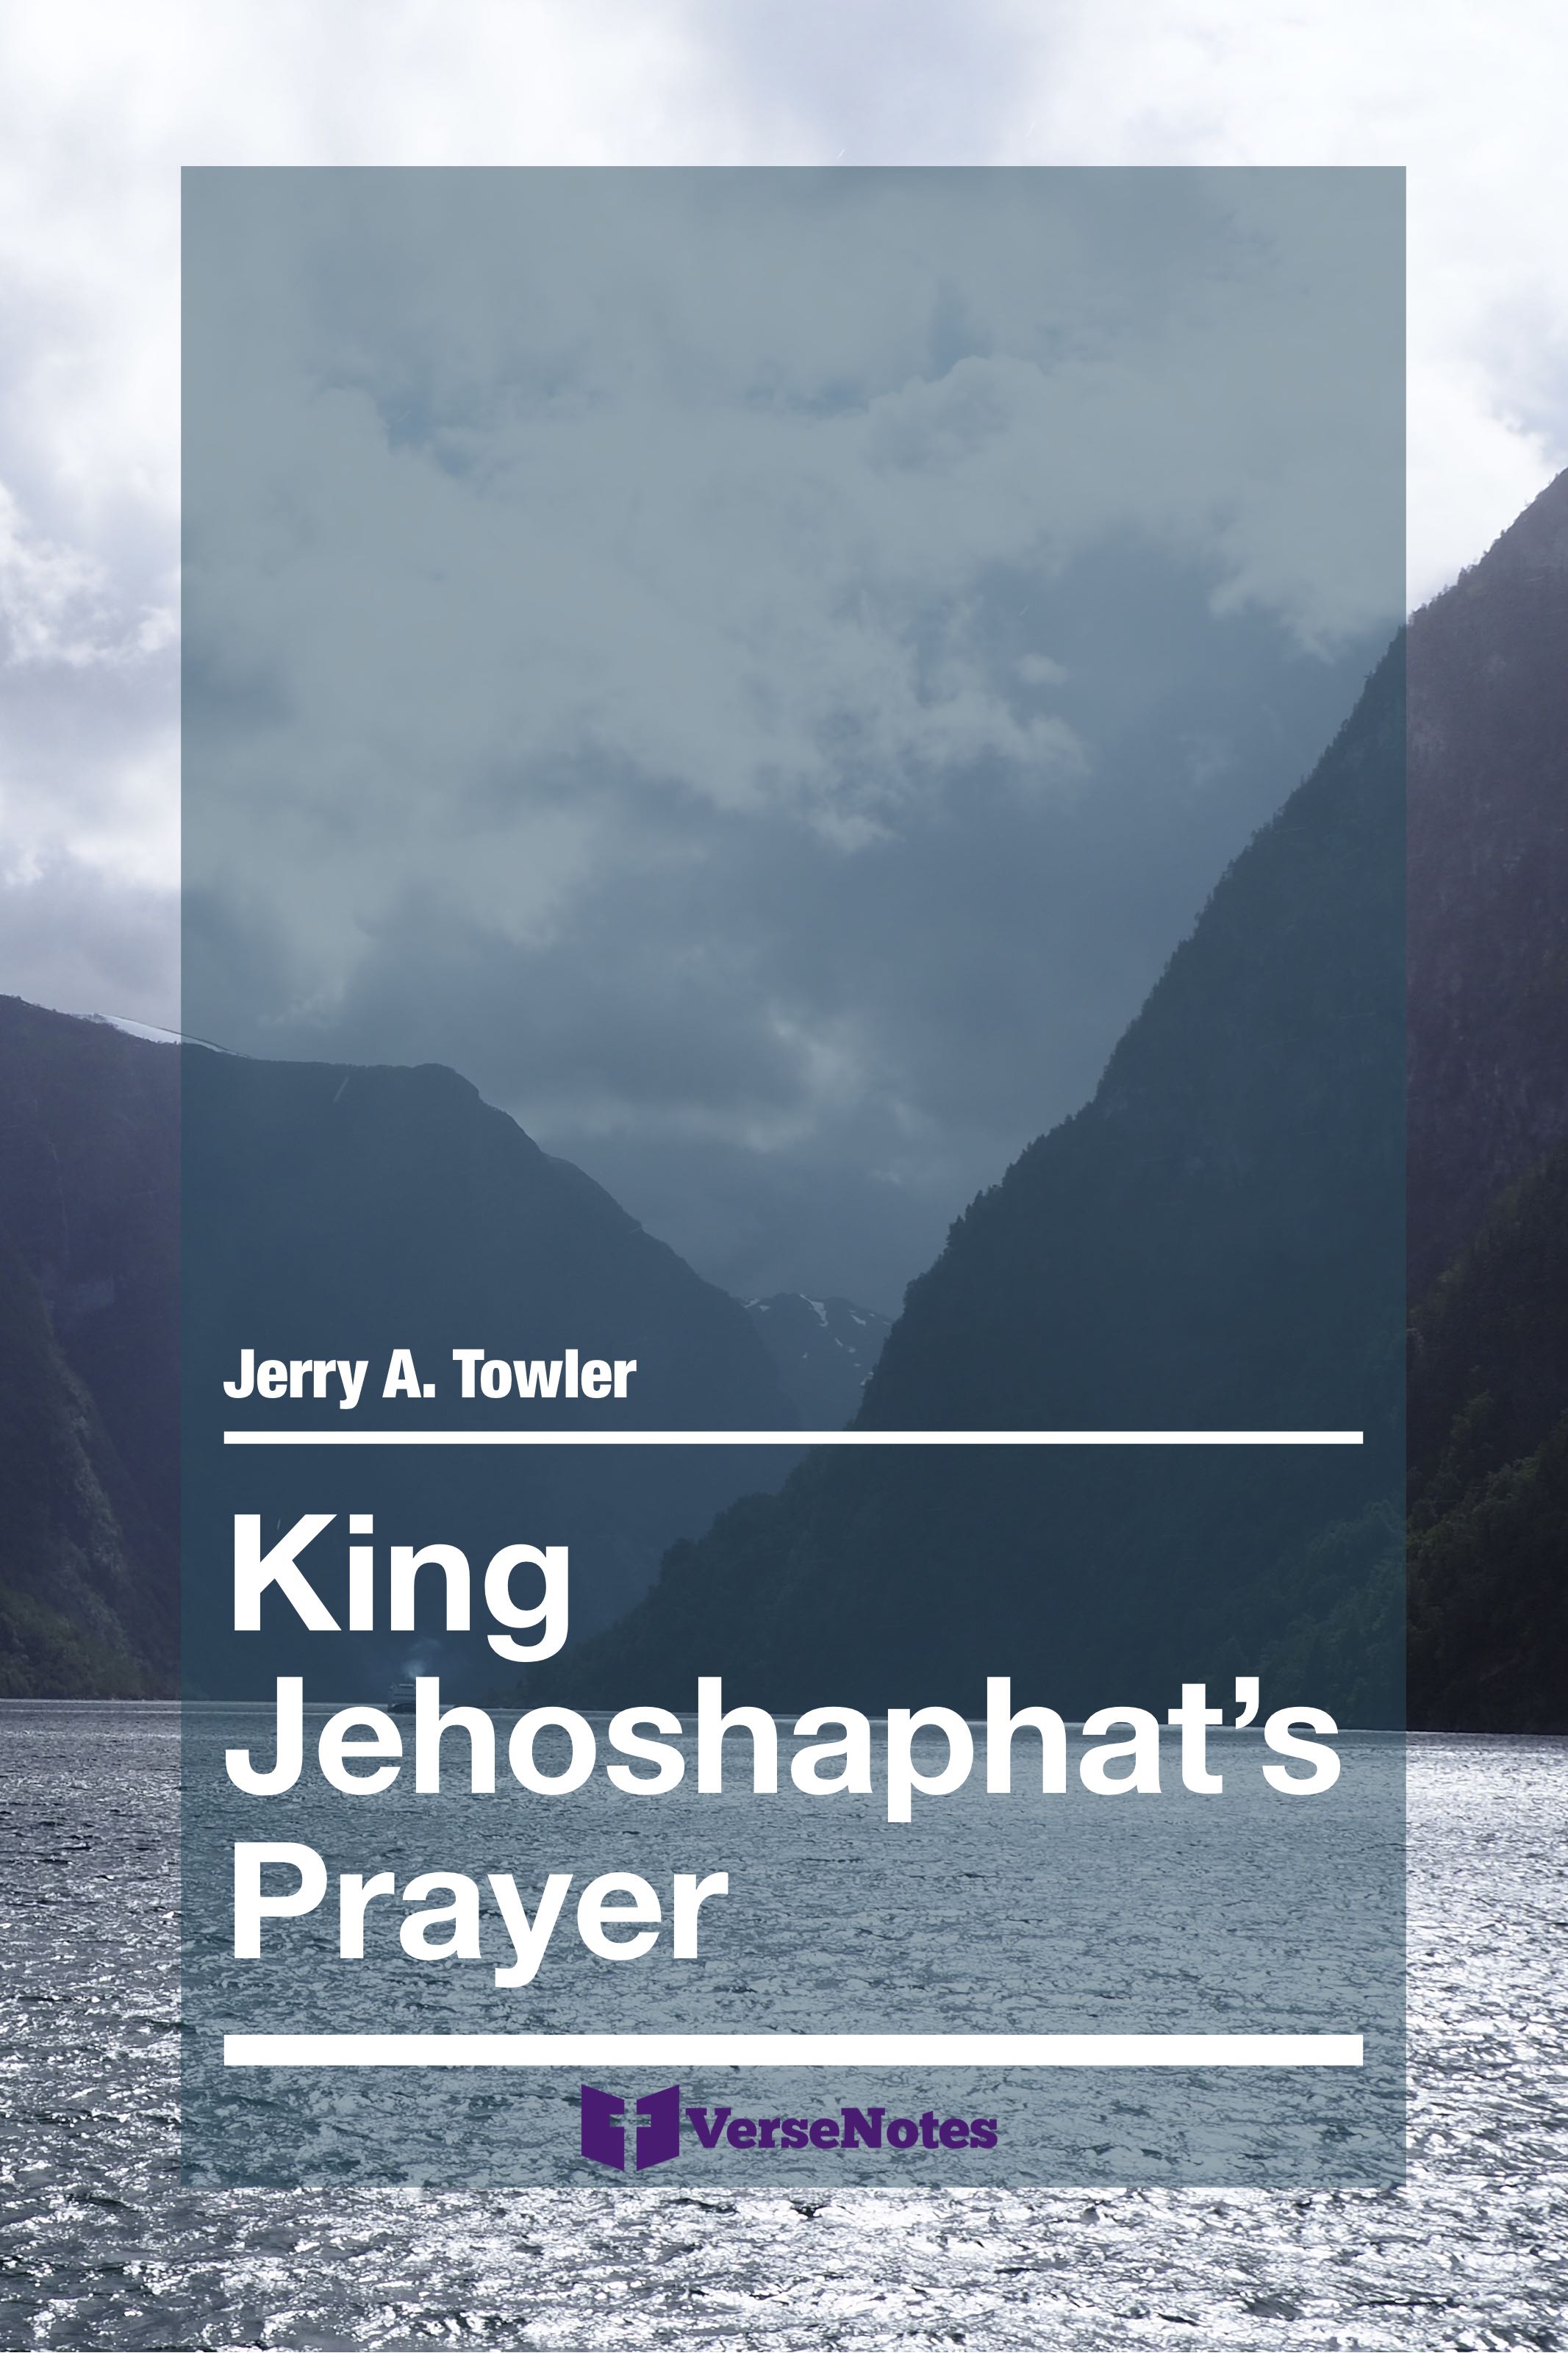 King Jehoshaphat's Prayer